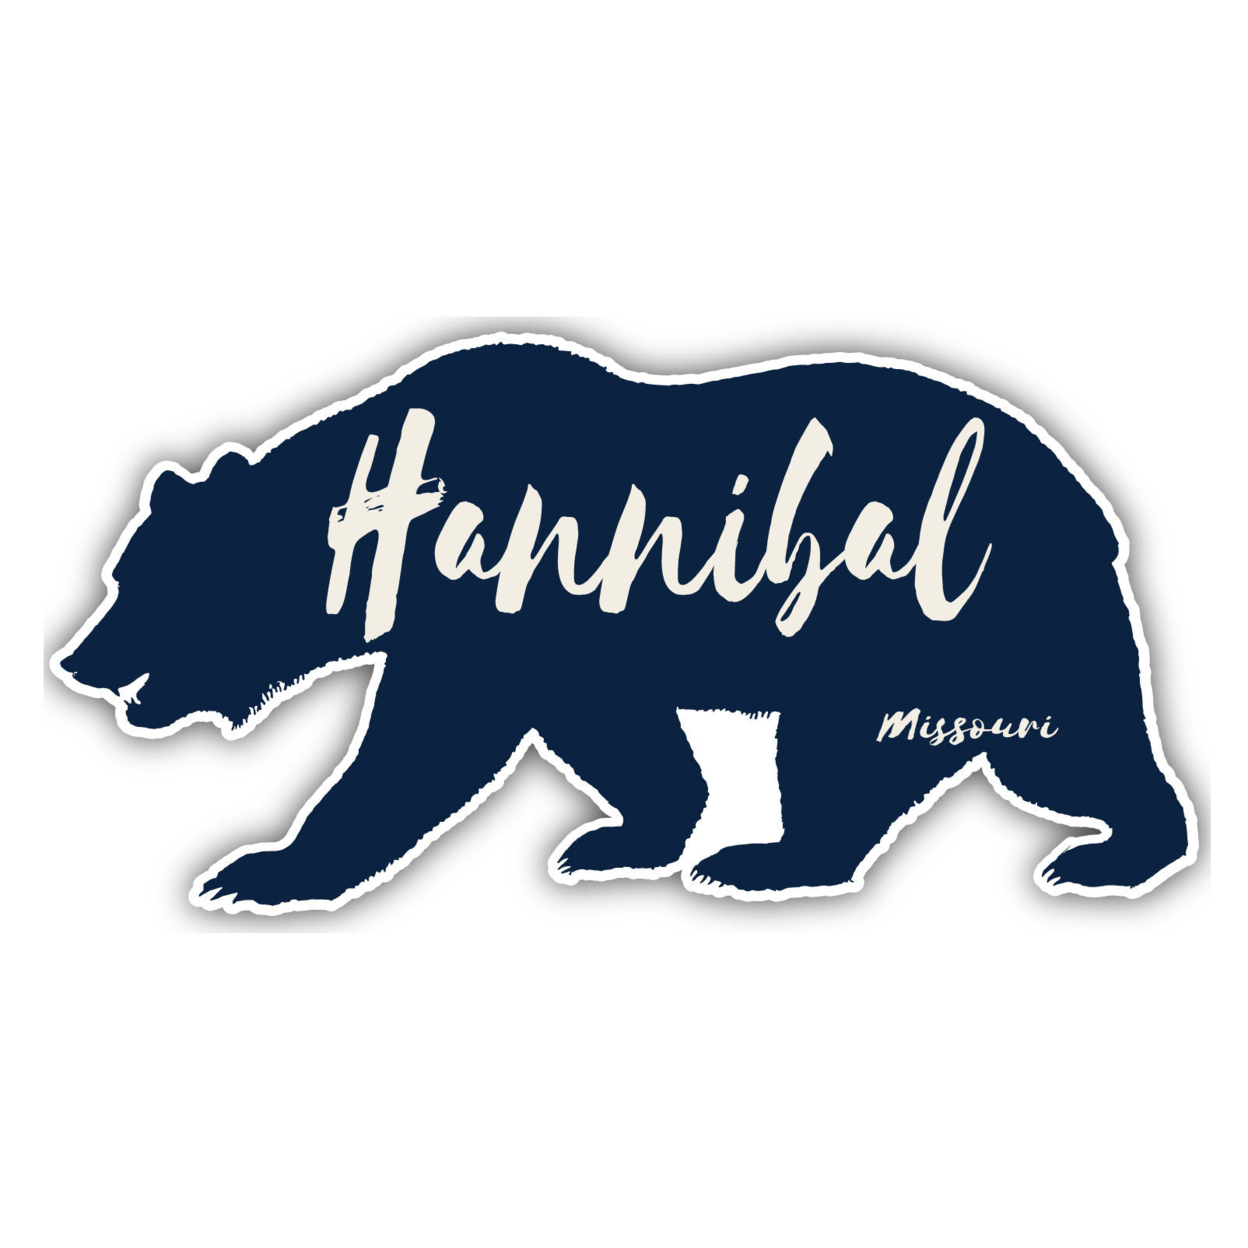 Hannibal Missouri Souvenir Decorative Stickers (Choose Theme And Size) - Single Unit, 6-Inch, Bear